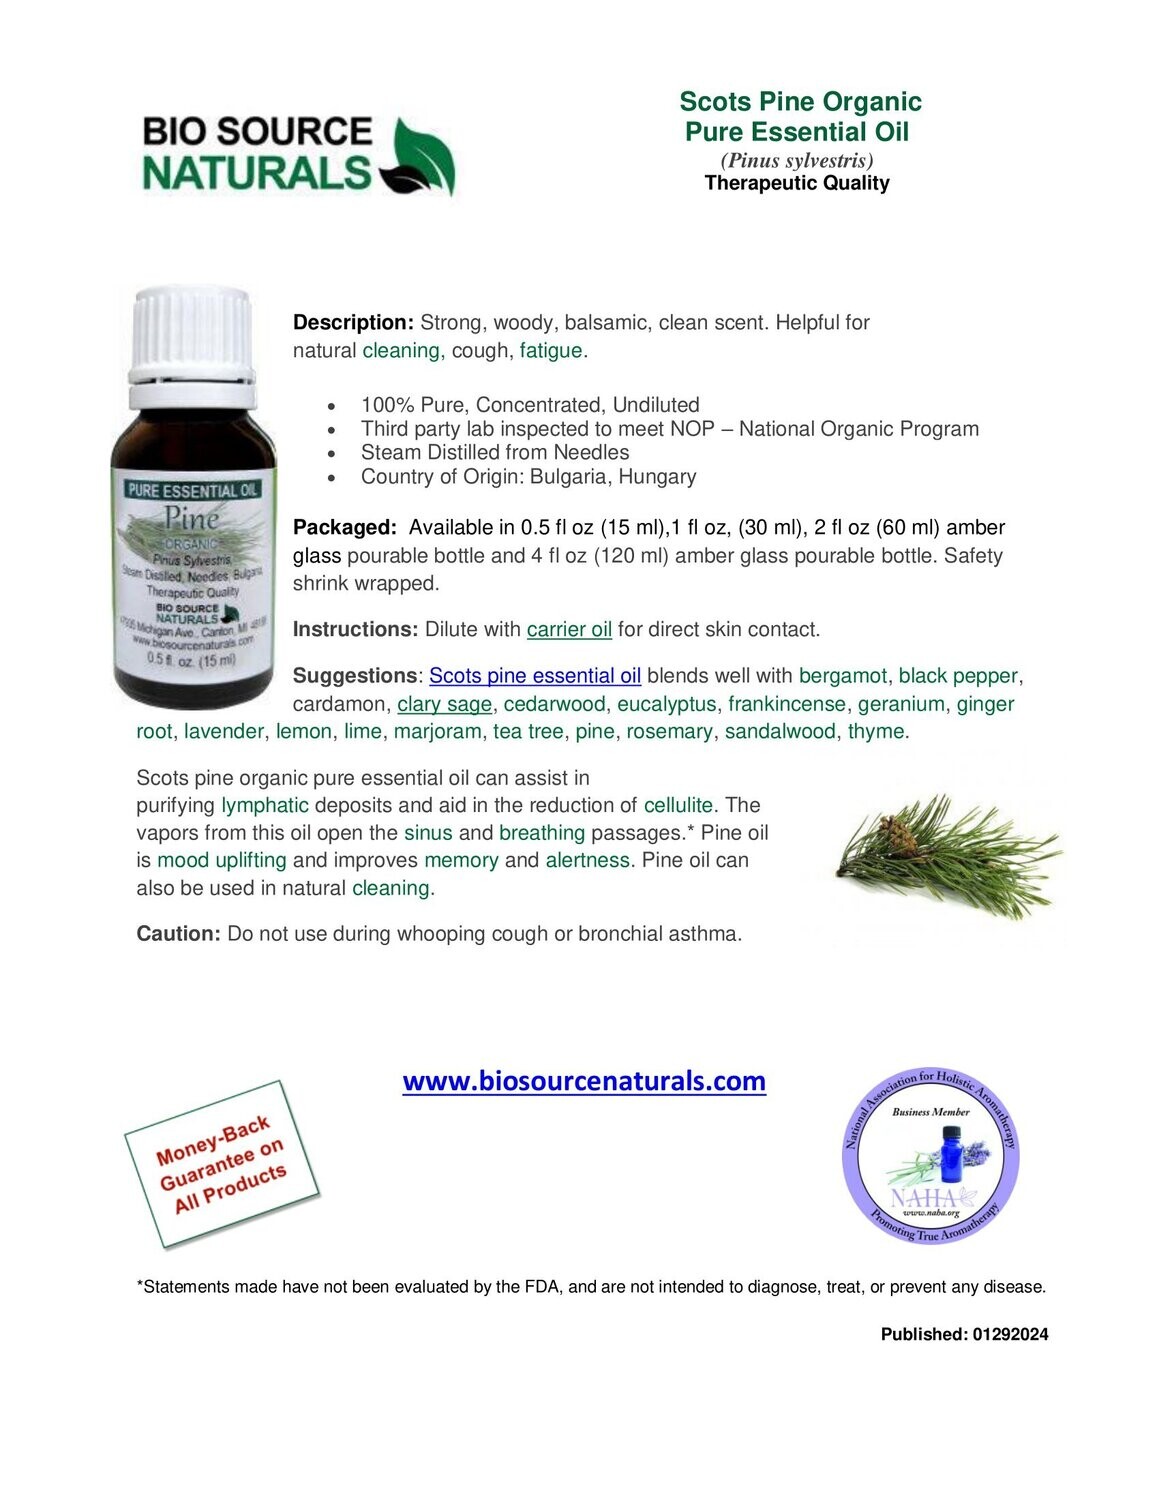 Pine, Scots Pure Essential Oil (Organic) - Bulgaria, Hungary - Product Bulletin